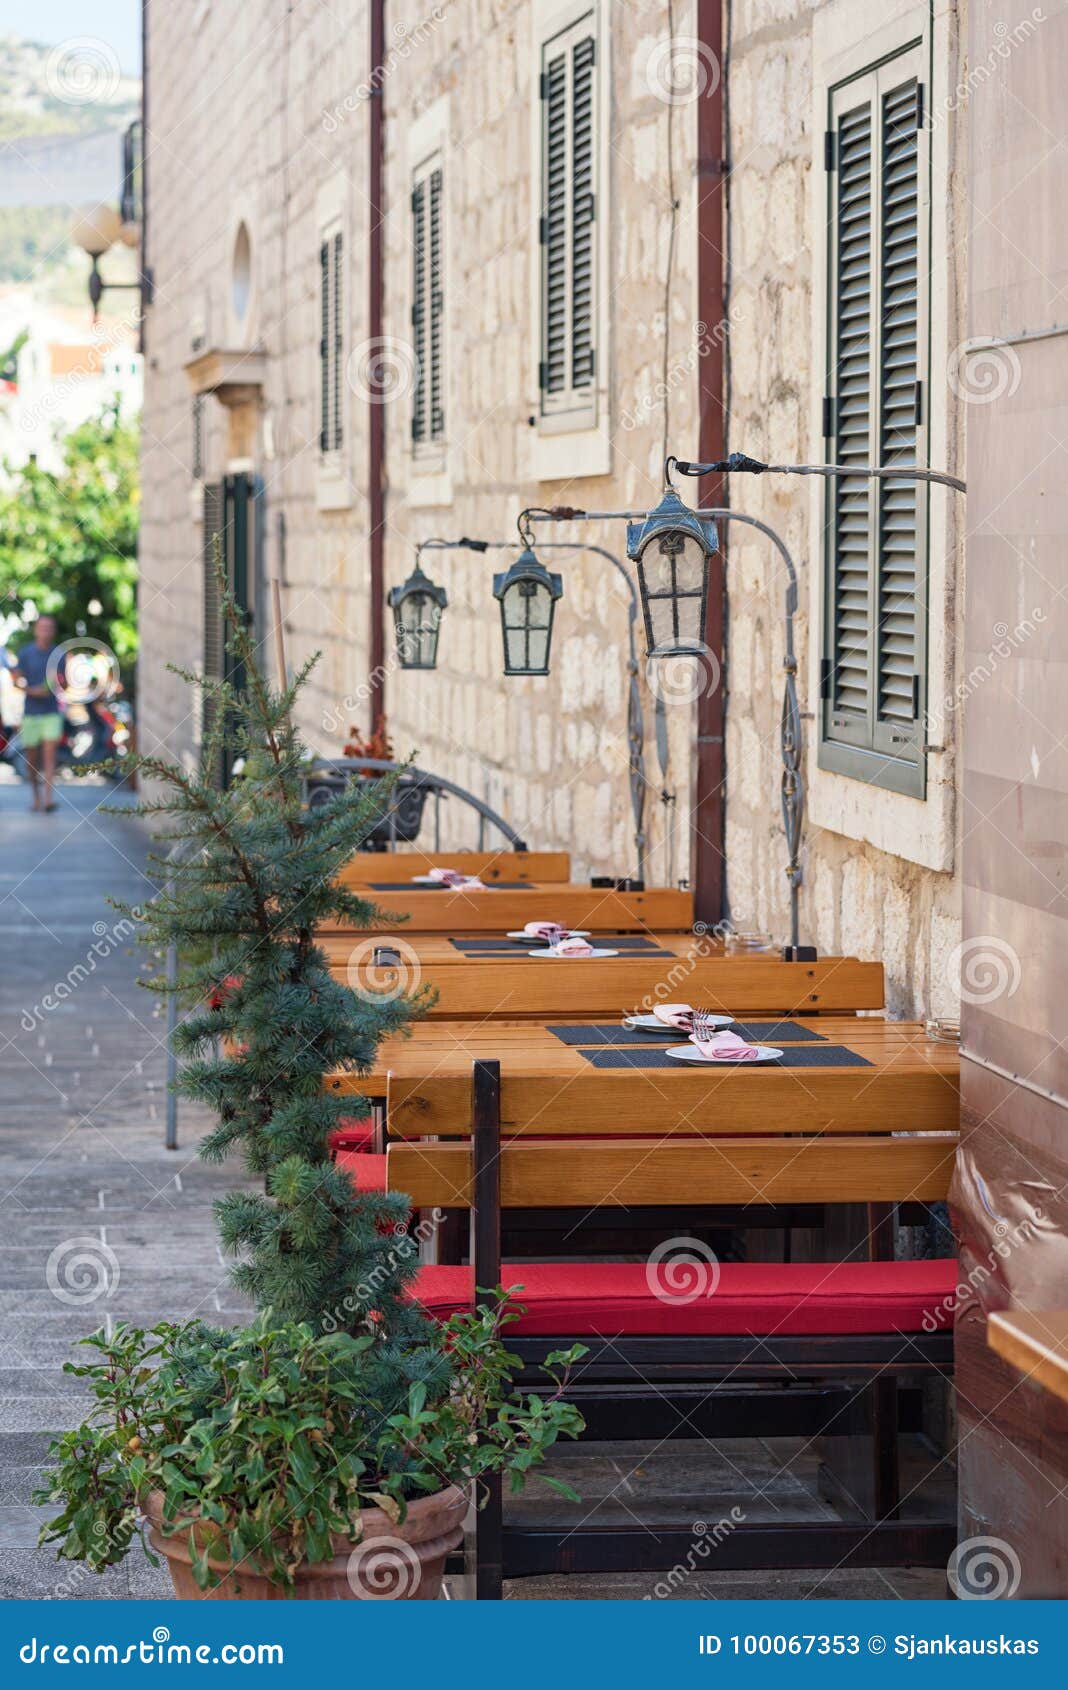 Street cafe  Croatia  stock image Image of shutter 